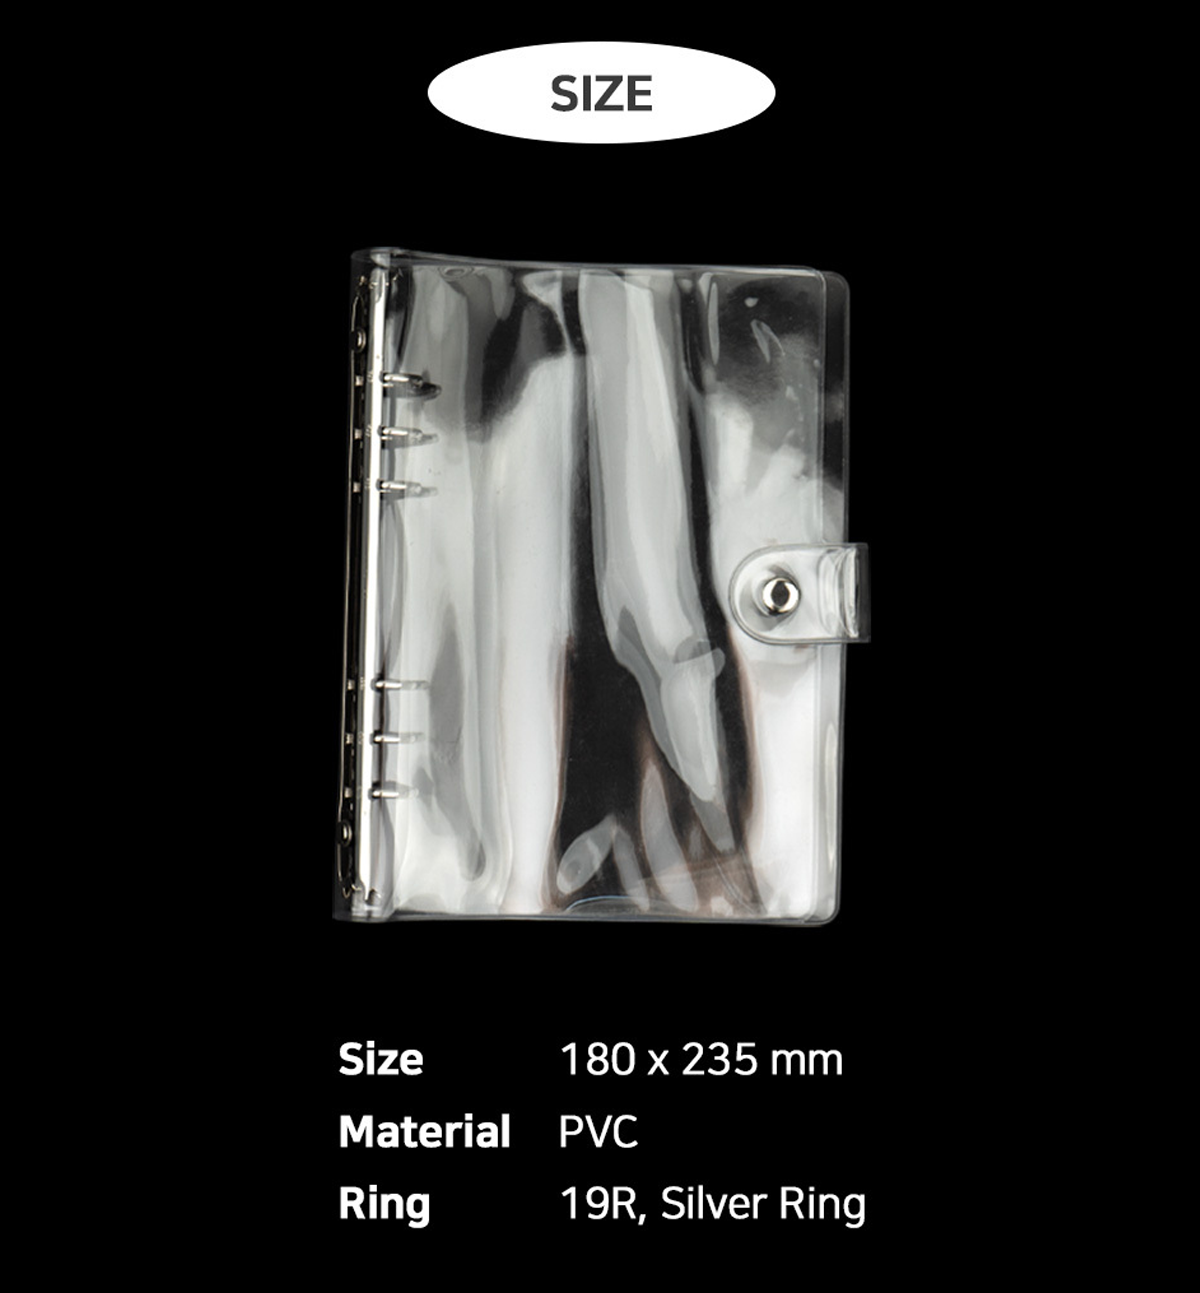 A5 PVC Pocket Cover [R19]